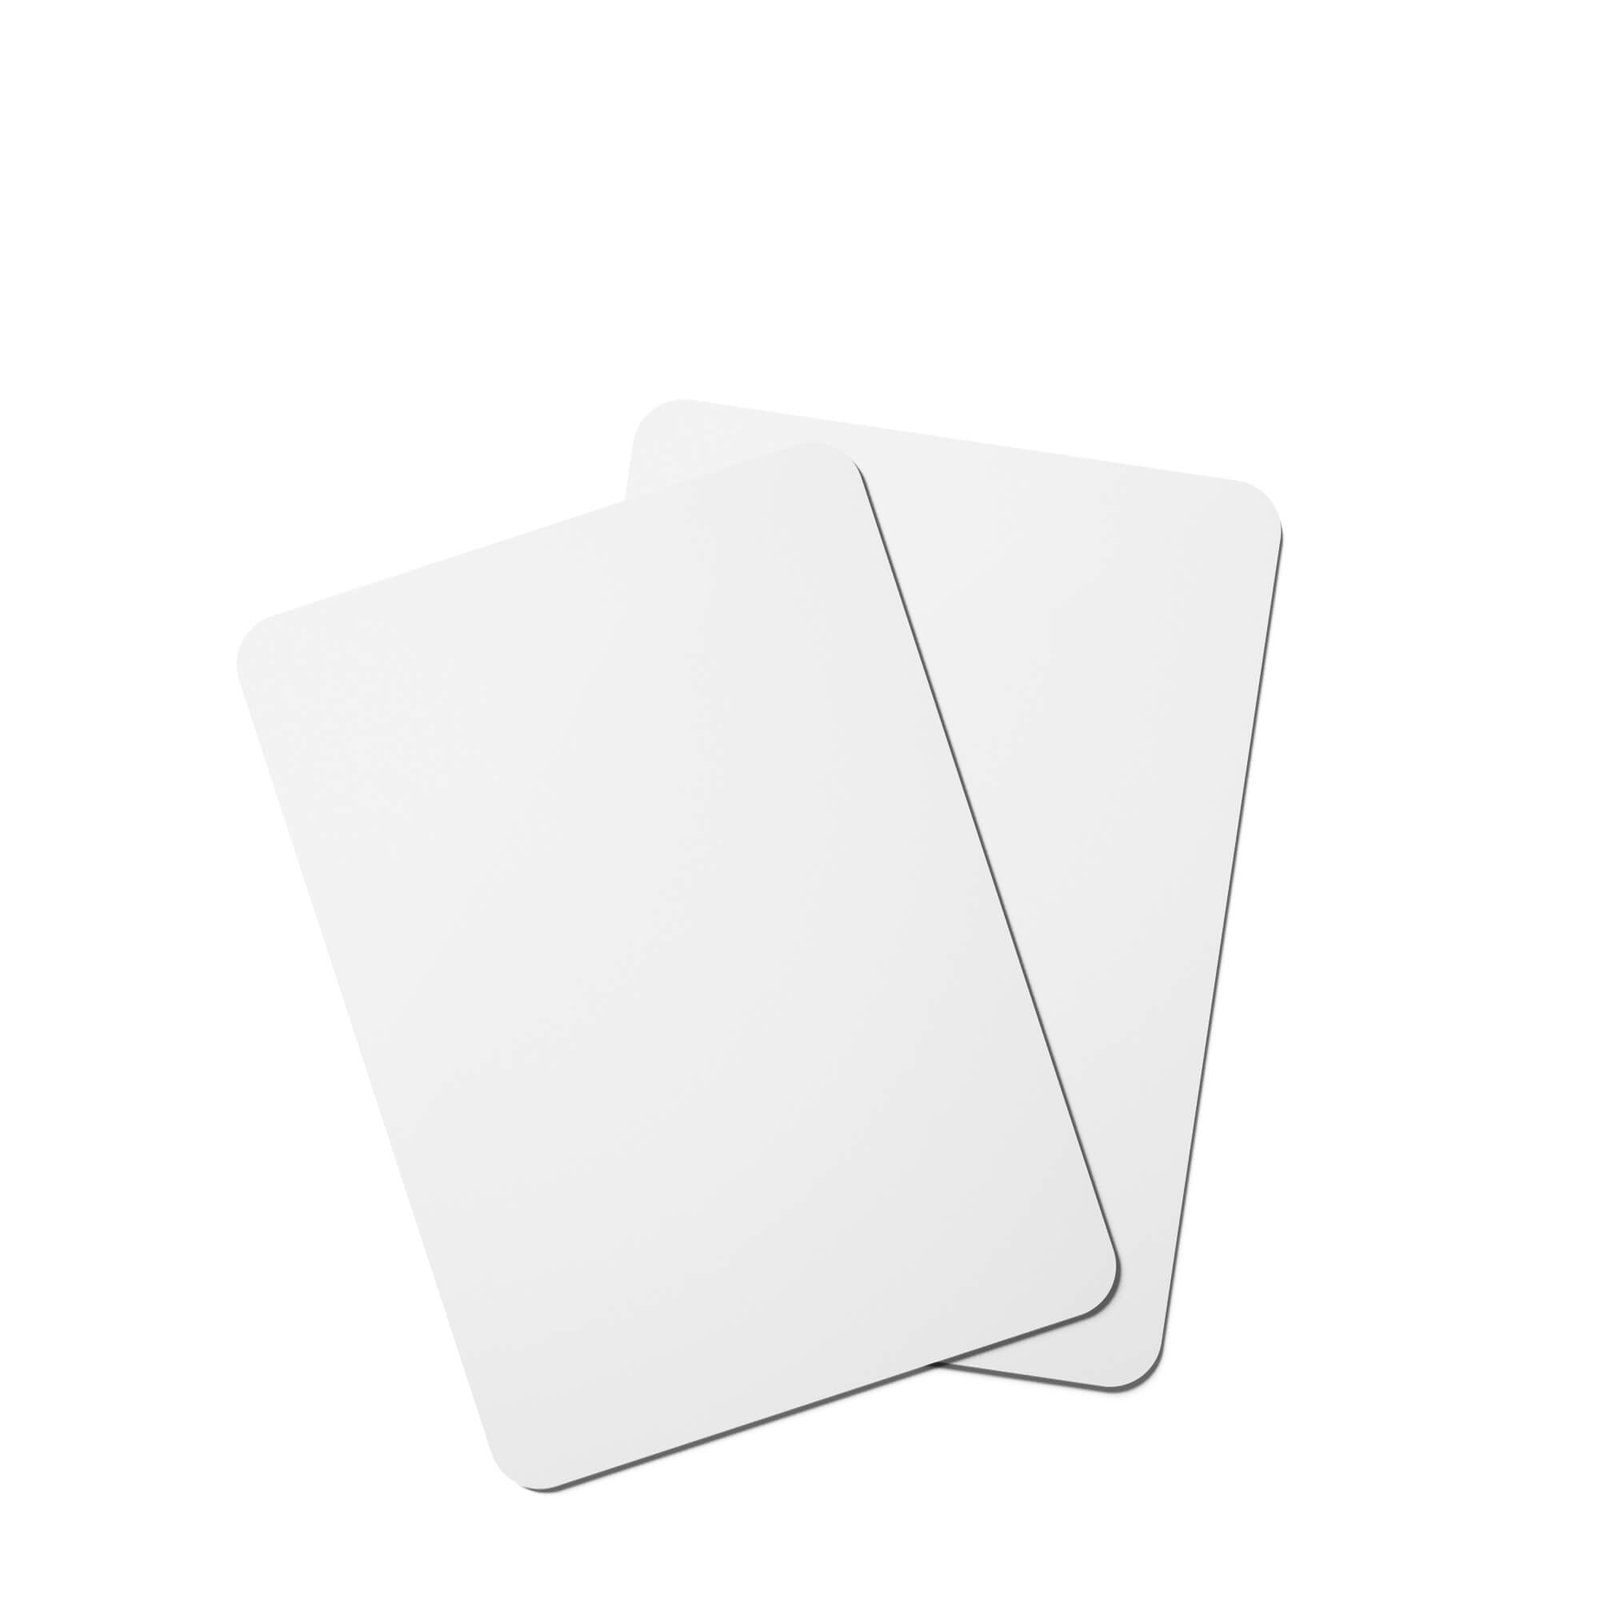 Blank Free Card Deck Mockup PSD Template